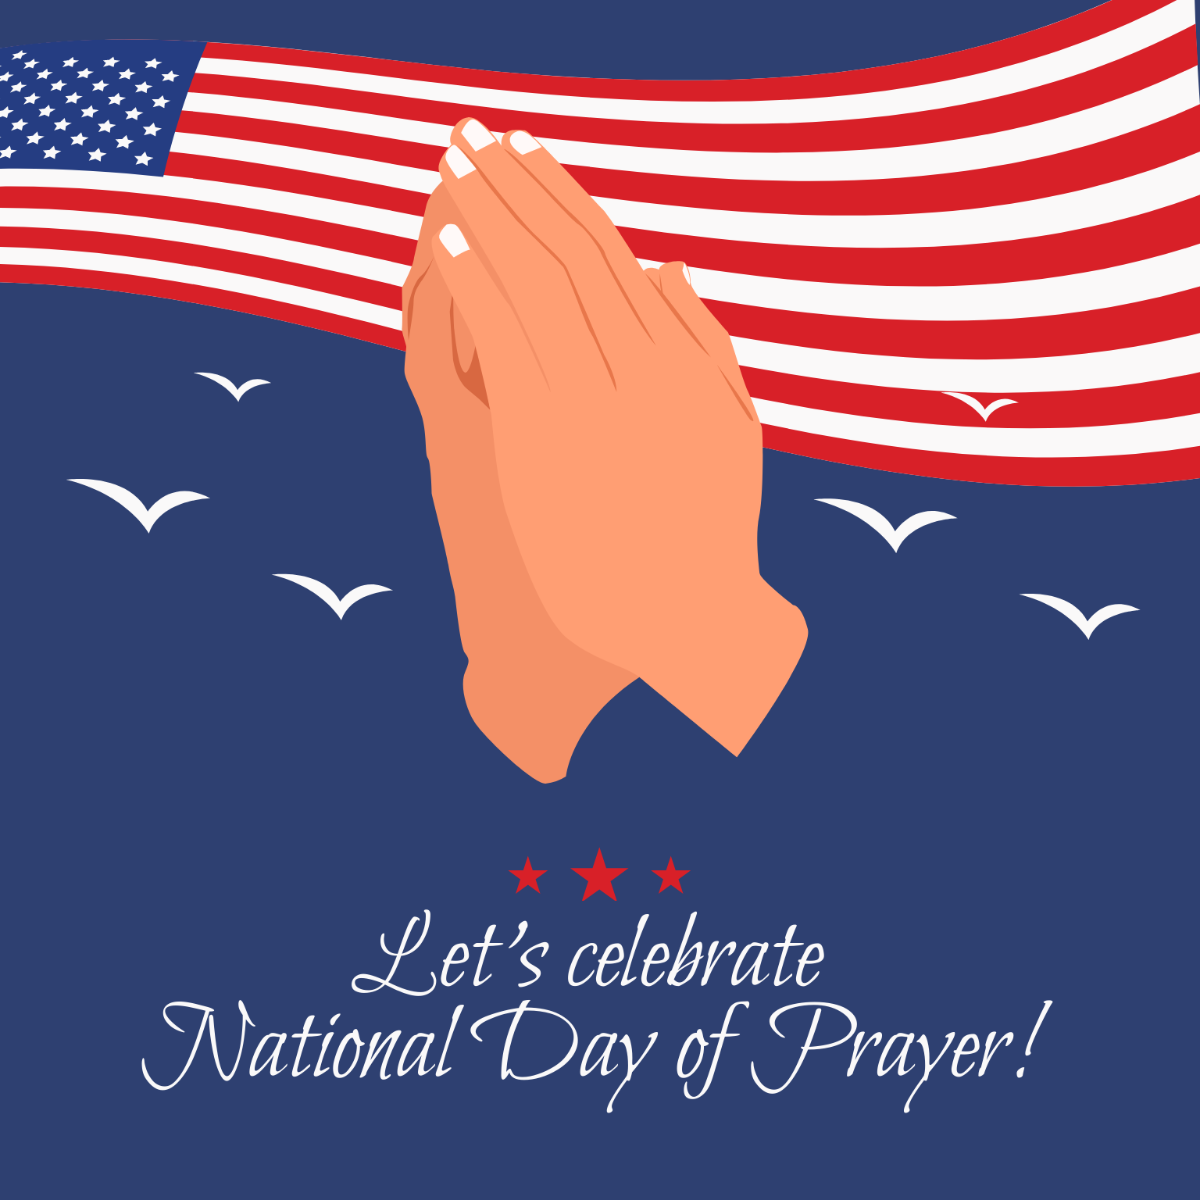 National Day of Prayer Celebration Vector Template